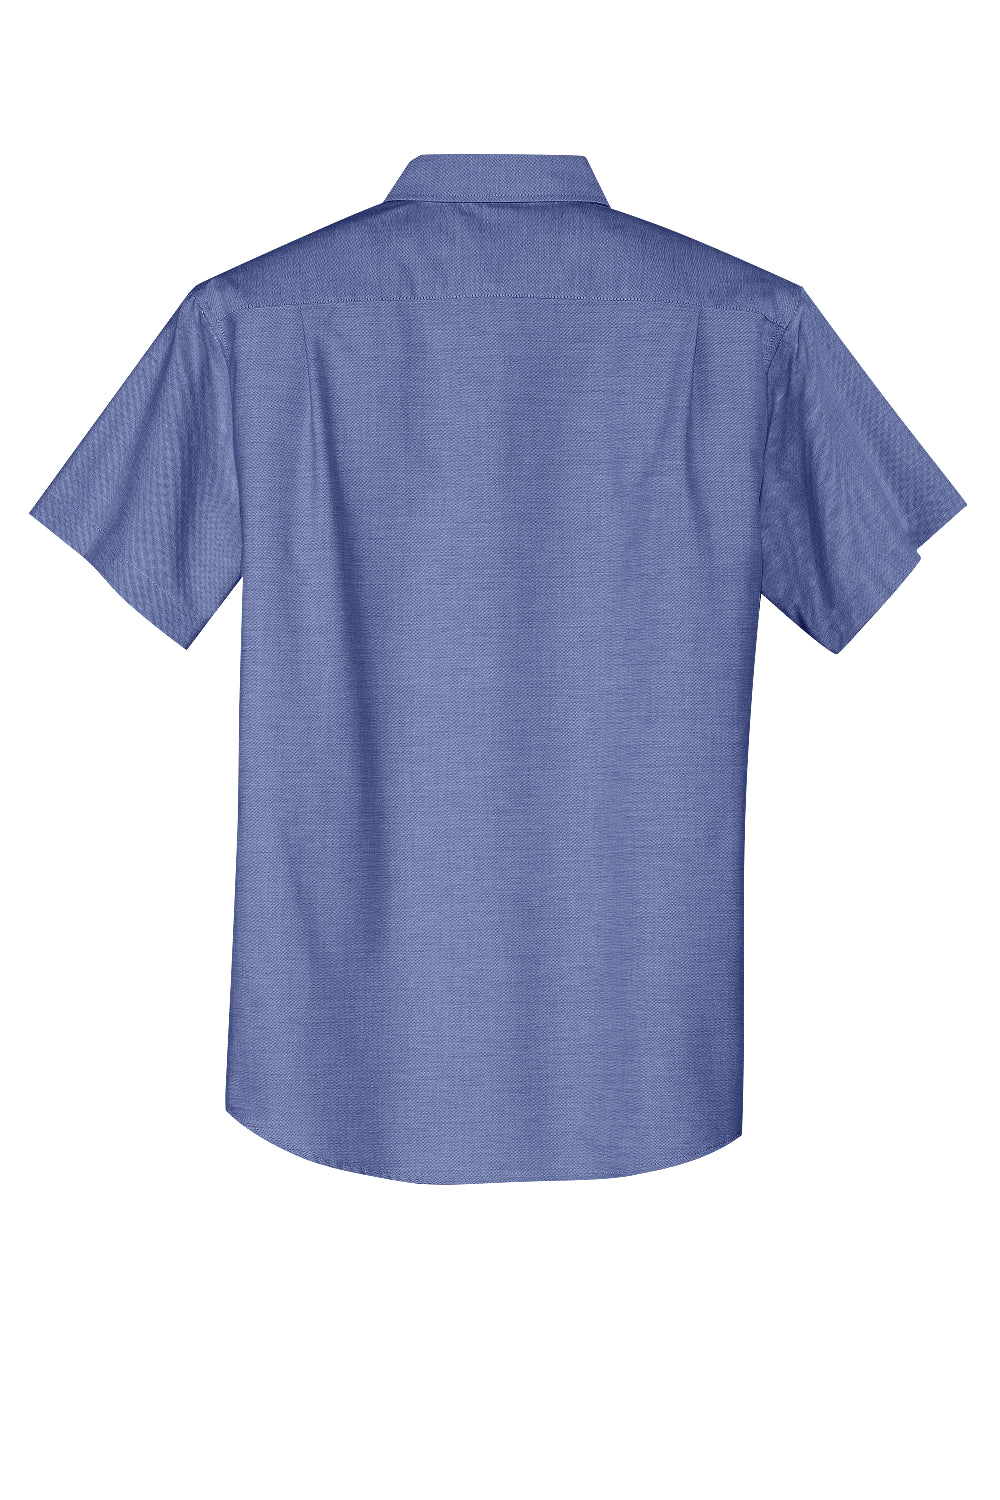 Port Authority S659 SuperPro Oxford Wrinkle Resistant Short Sleeve Button Down Shirt w/ Pocket Navy Blue Flat Back